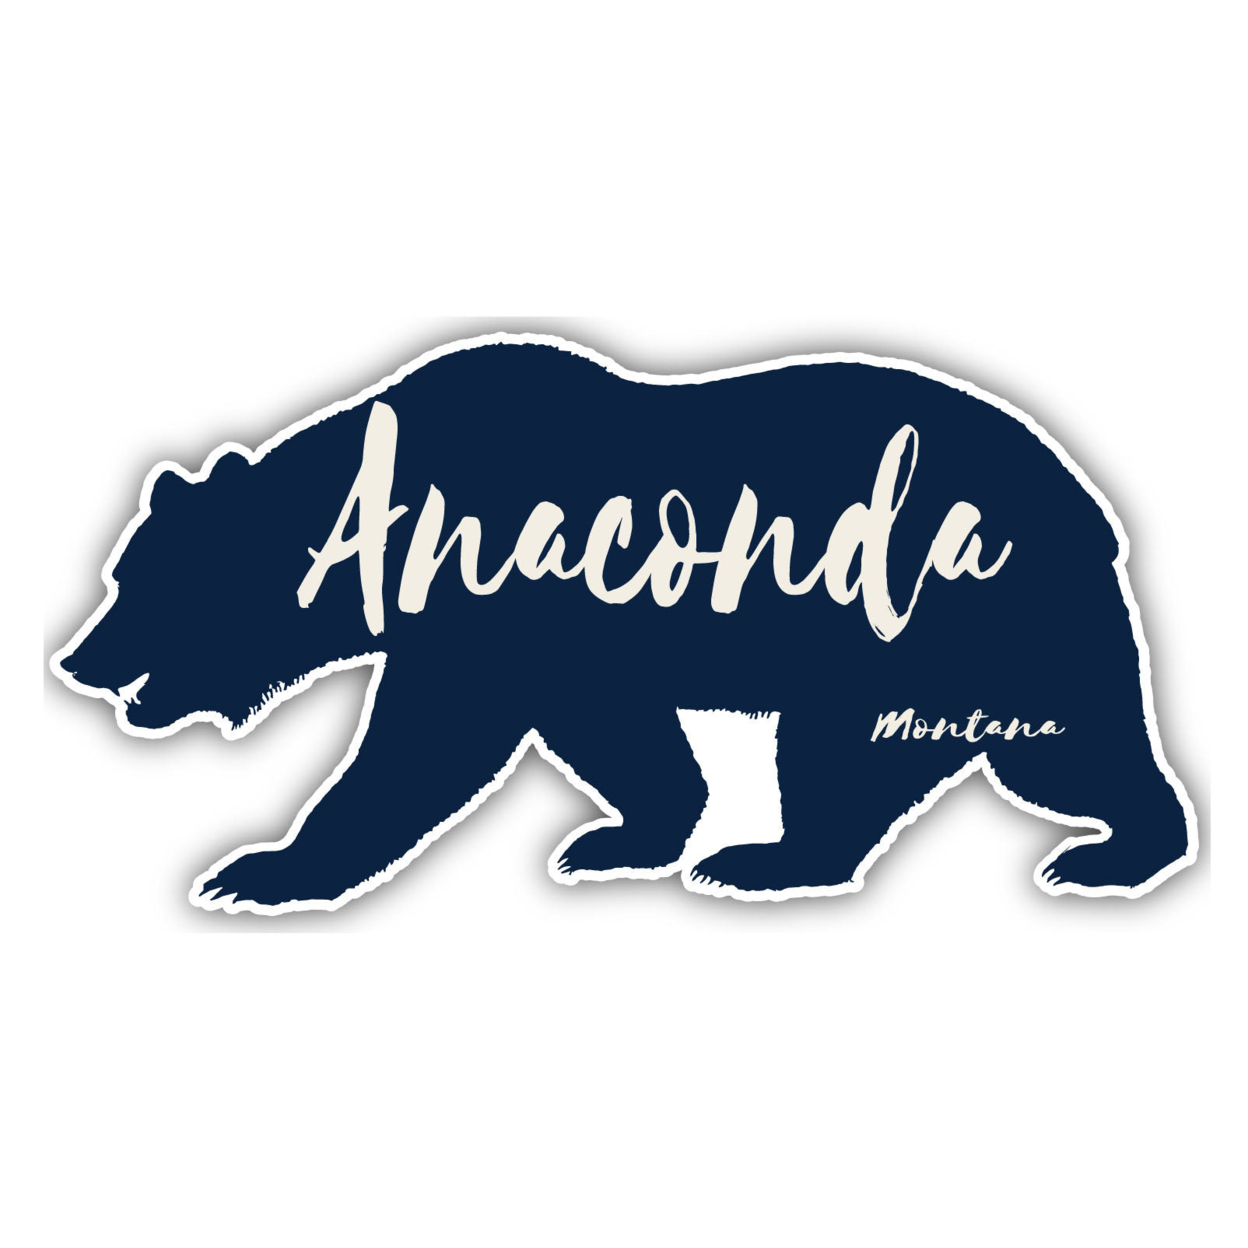 Anaconda Montana Souvenir Decorative Stickers (Choose Theme And Size) - Single Unit, 4-Inch, Bear